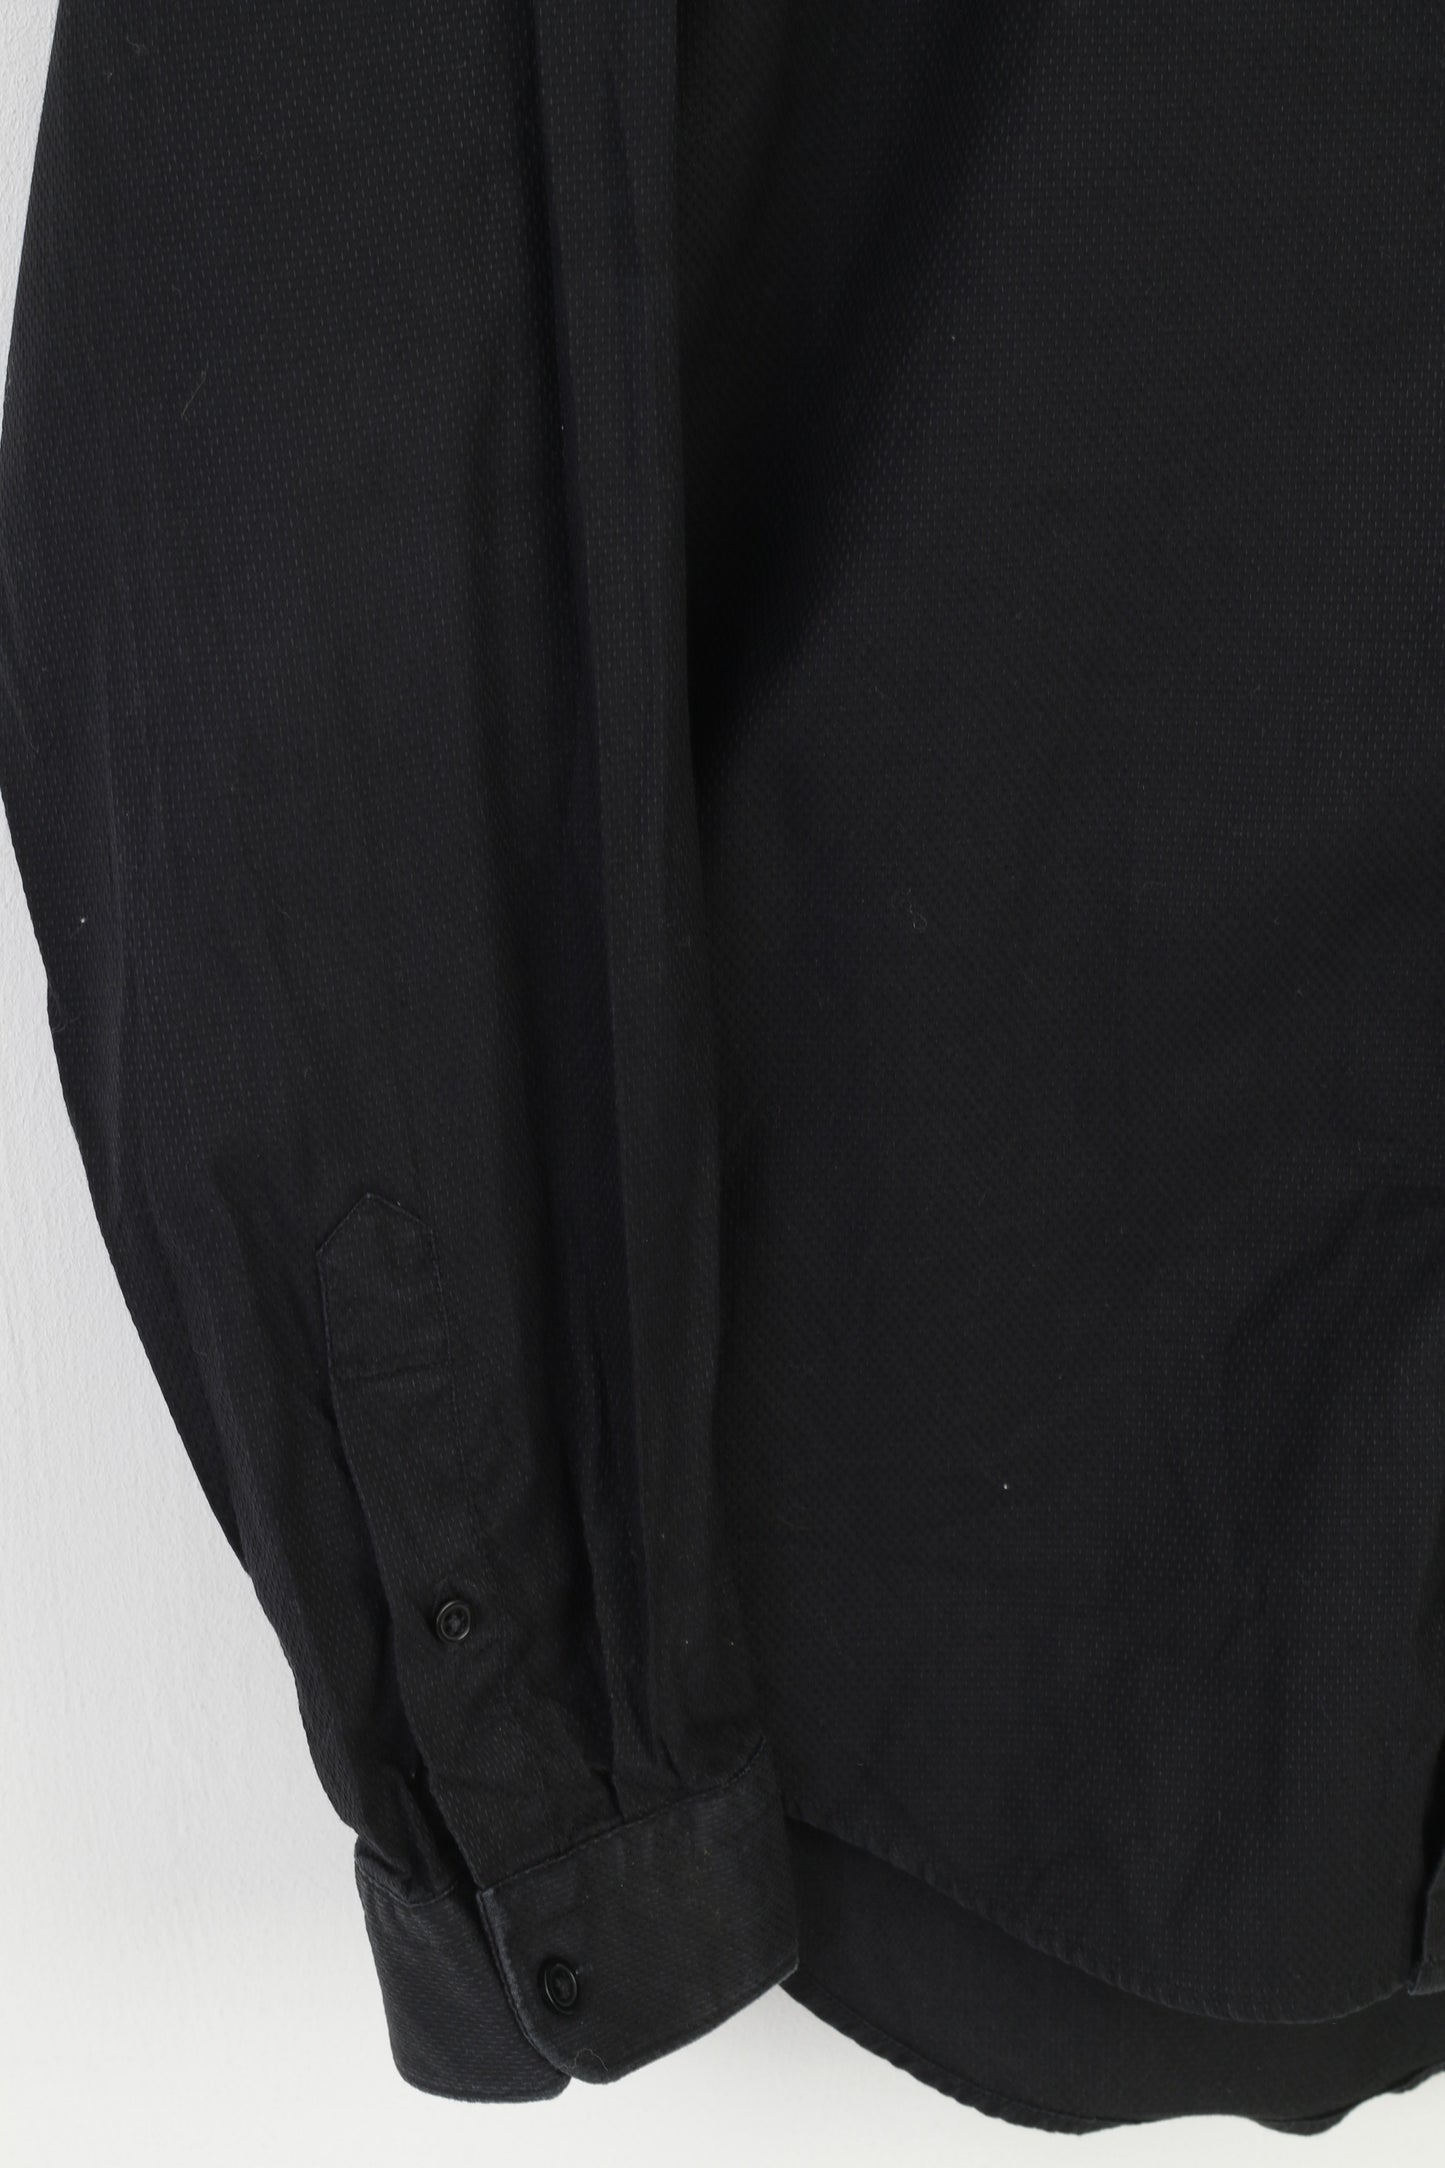 Zara  Men XL Casual Shirt Black Cotton Slim Fit Long Sleeve Top